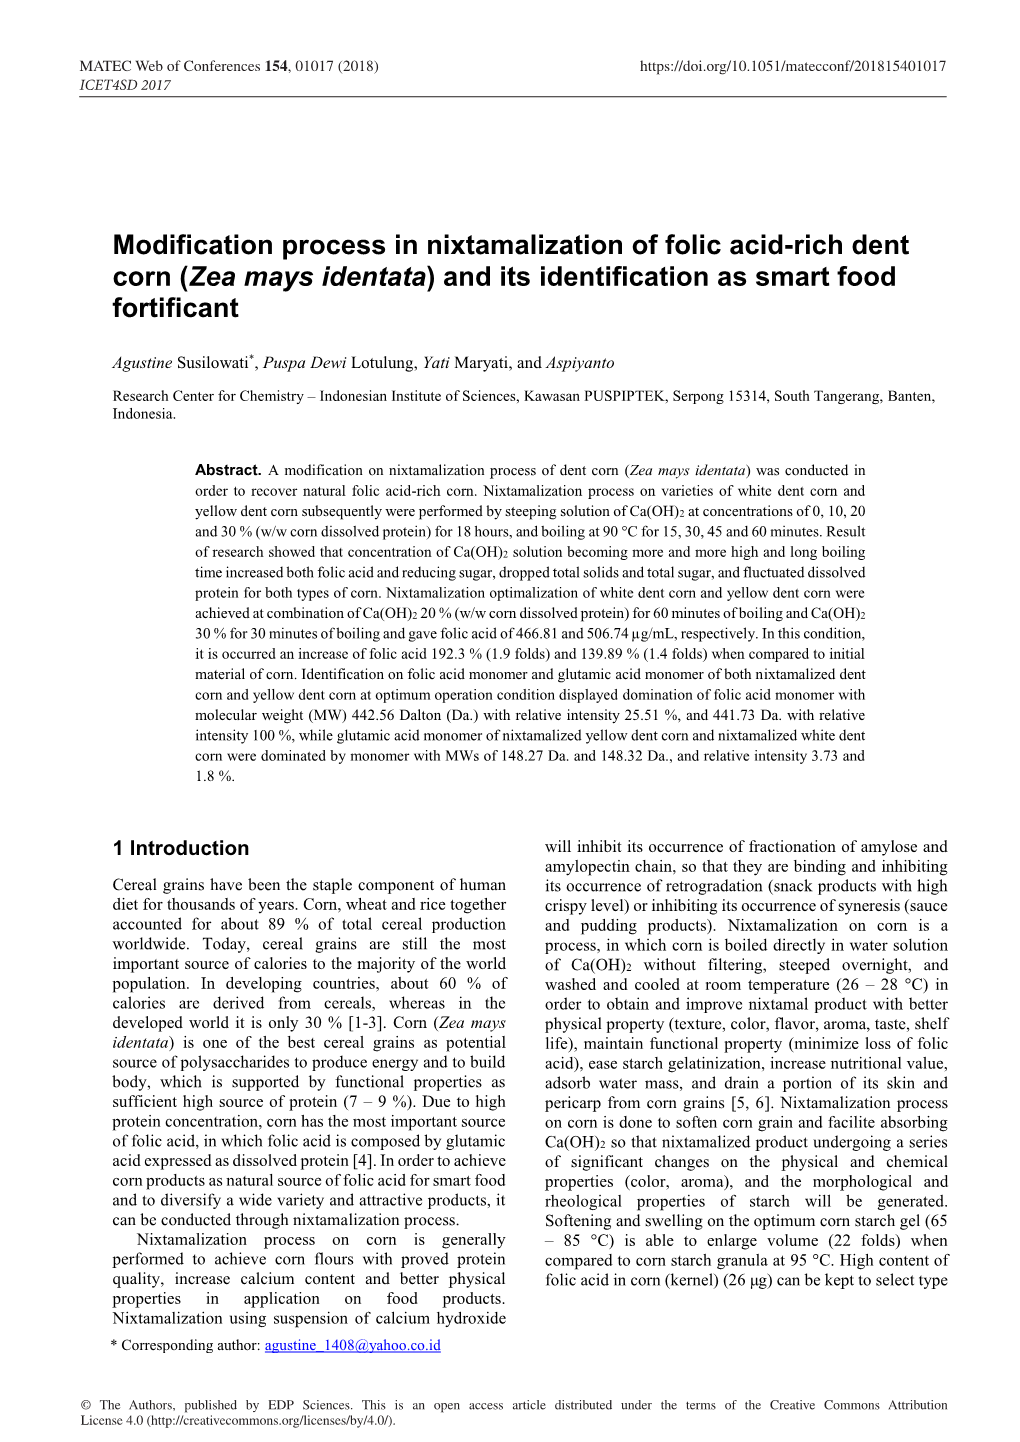 Modification Process in Nixtamalization of Folic Acid-Rich Dent Corn (Zea Mays Identata) and Its Identification As Smart Food Fortificant